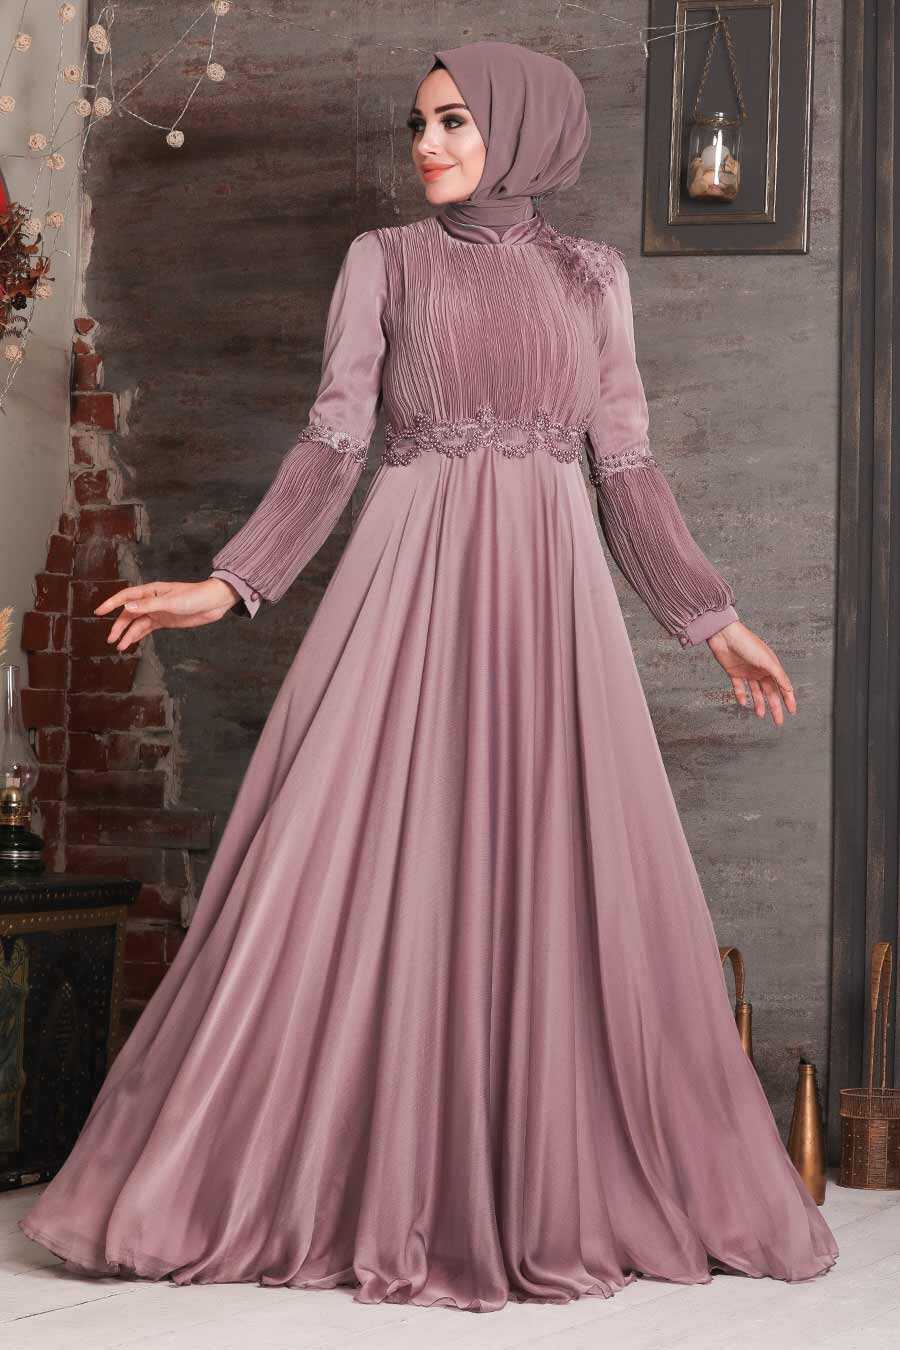 dusty rose evening dress